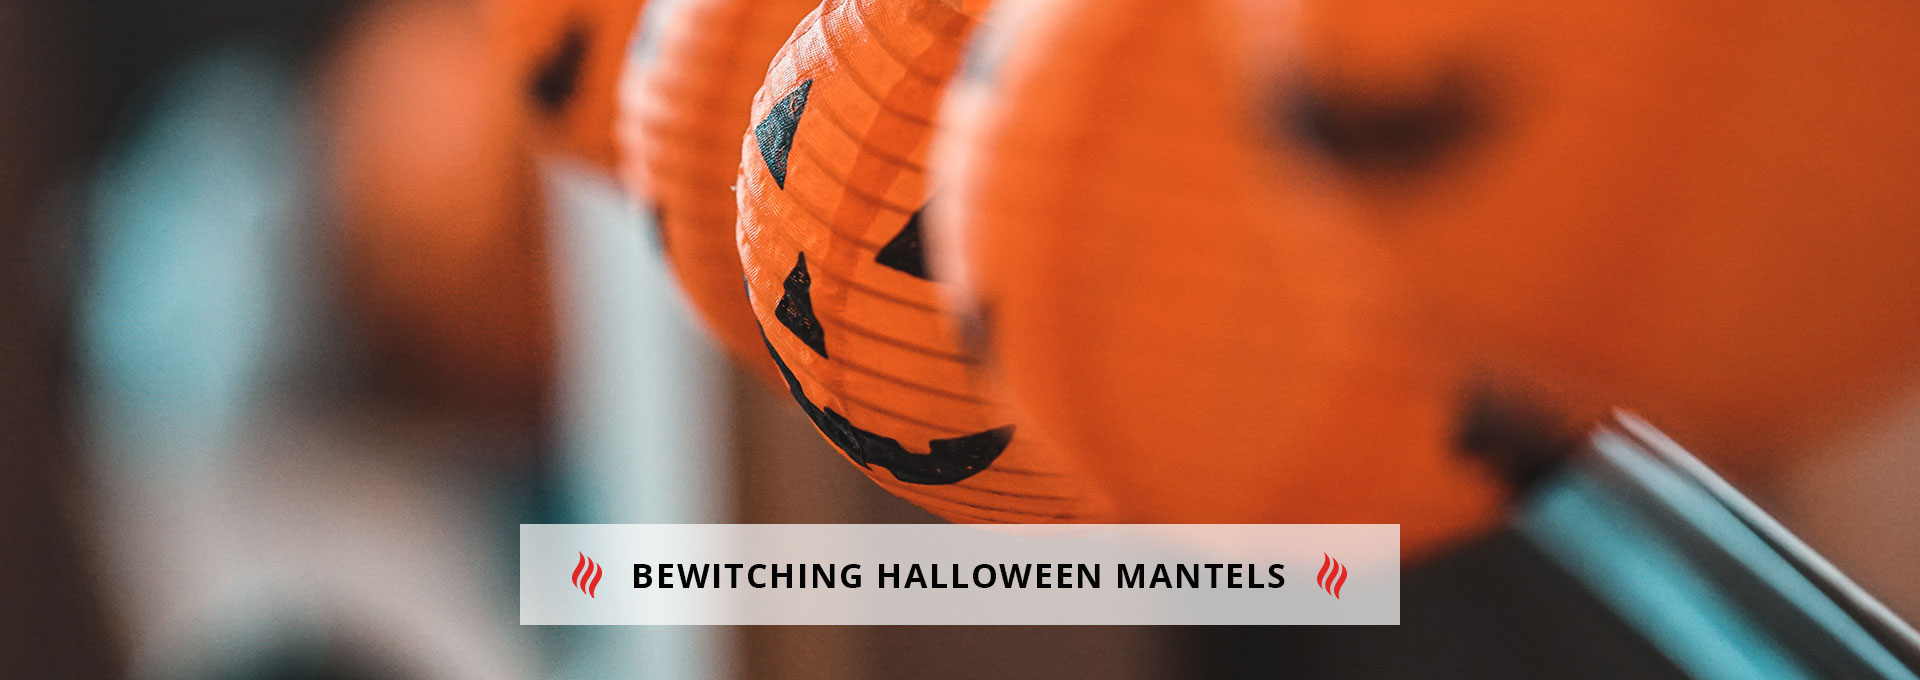 Bewitching Halloween Mantels  